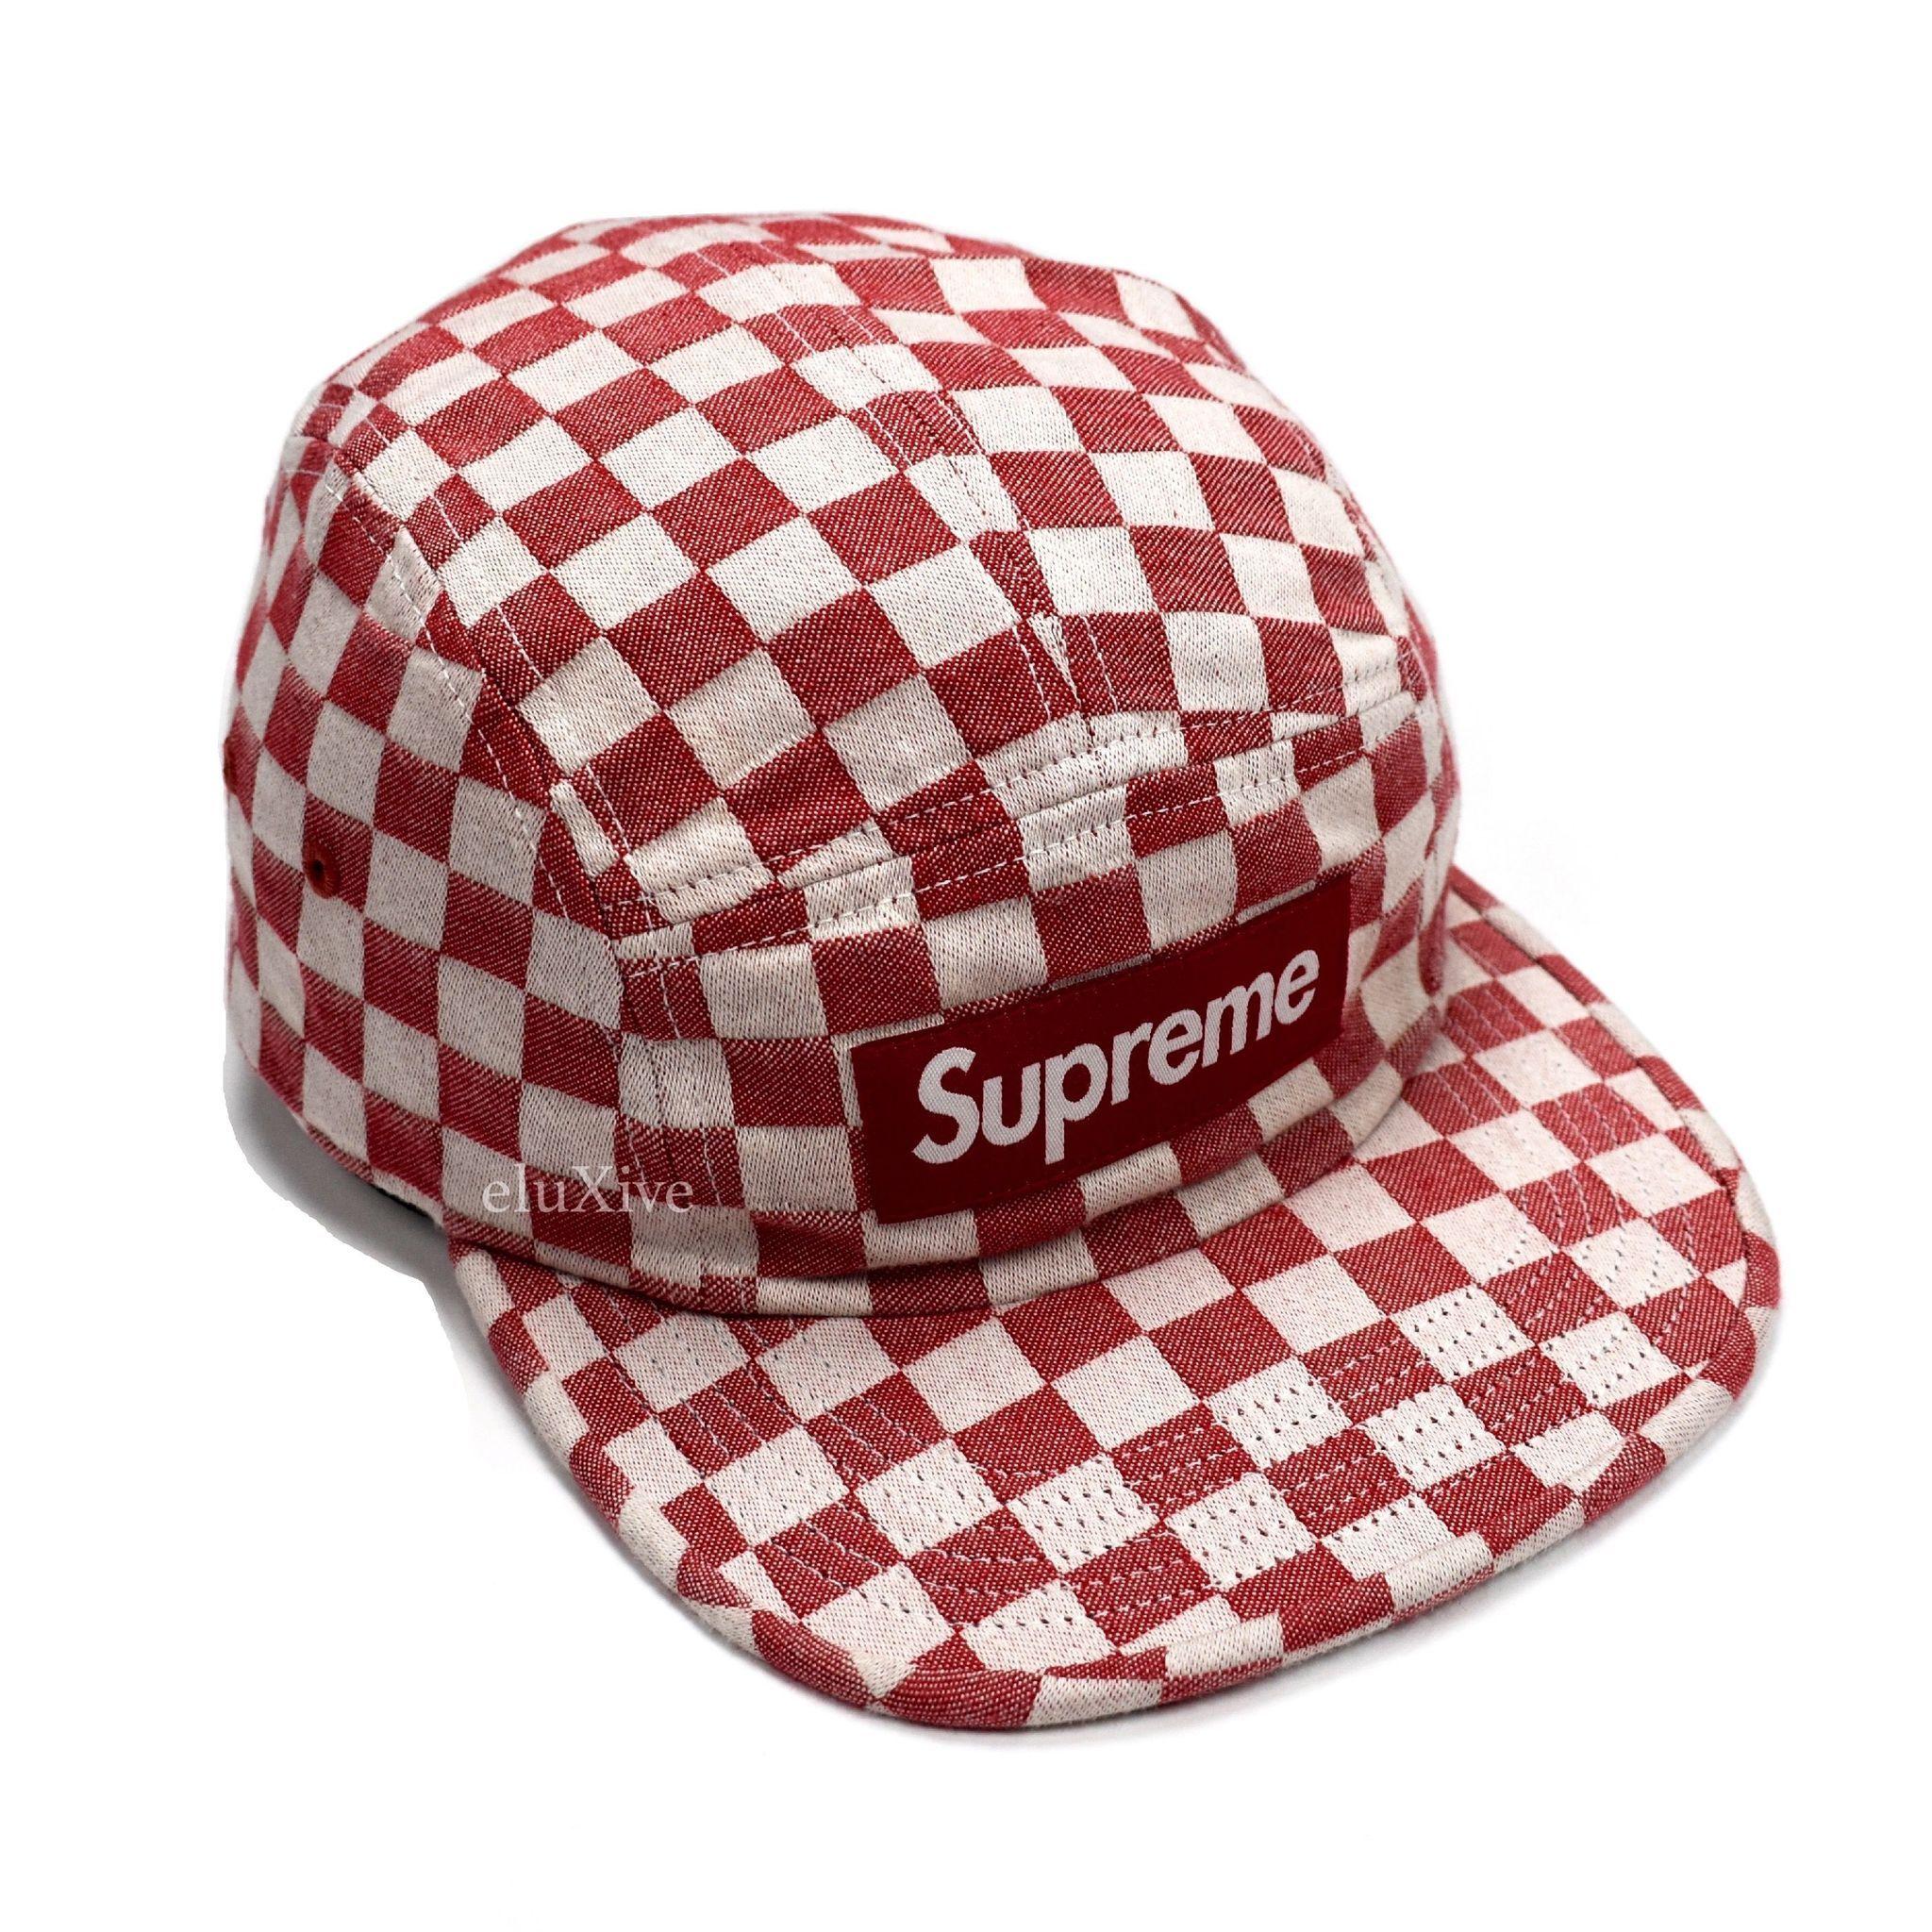 Red White Checkered Logo - Supreme Red / White Checkered Box Logo Camp Cap Hat